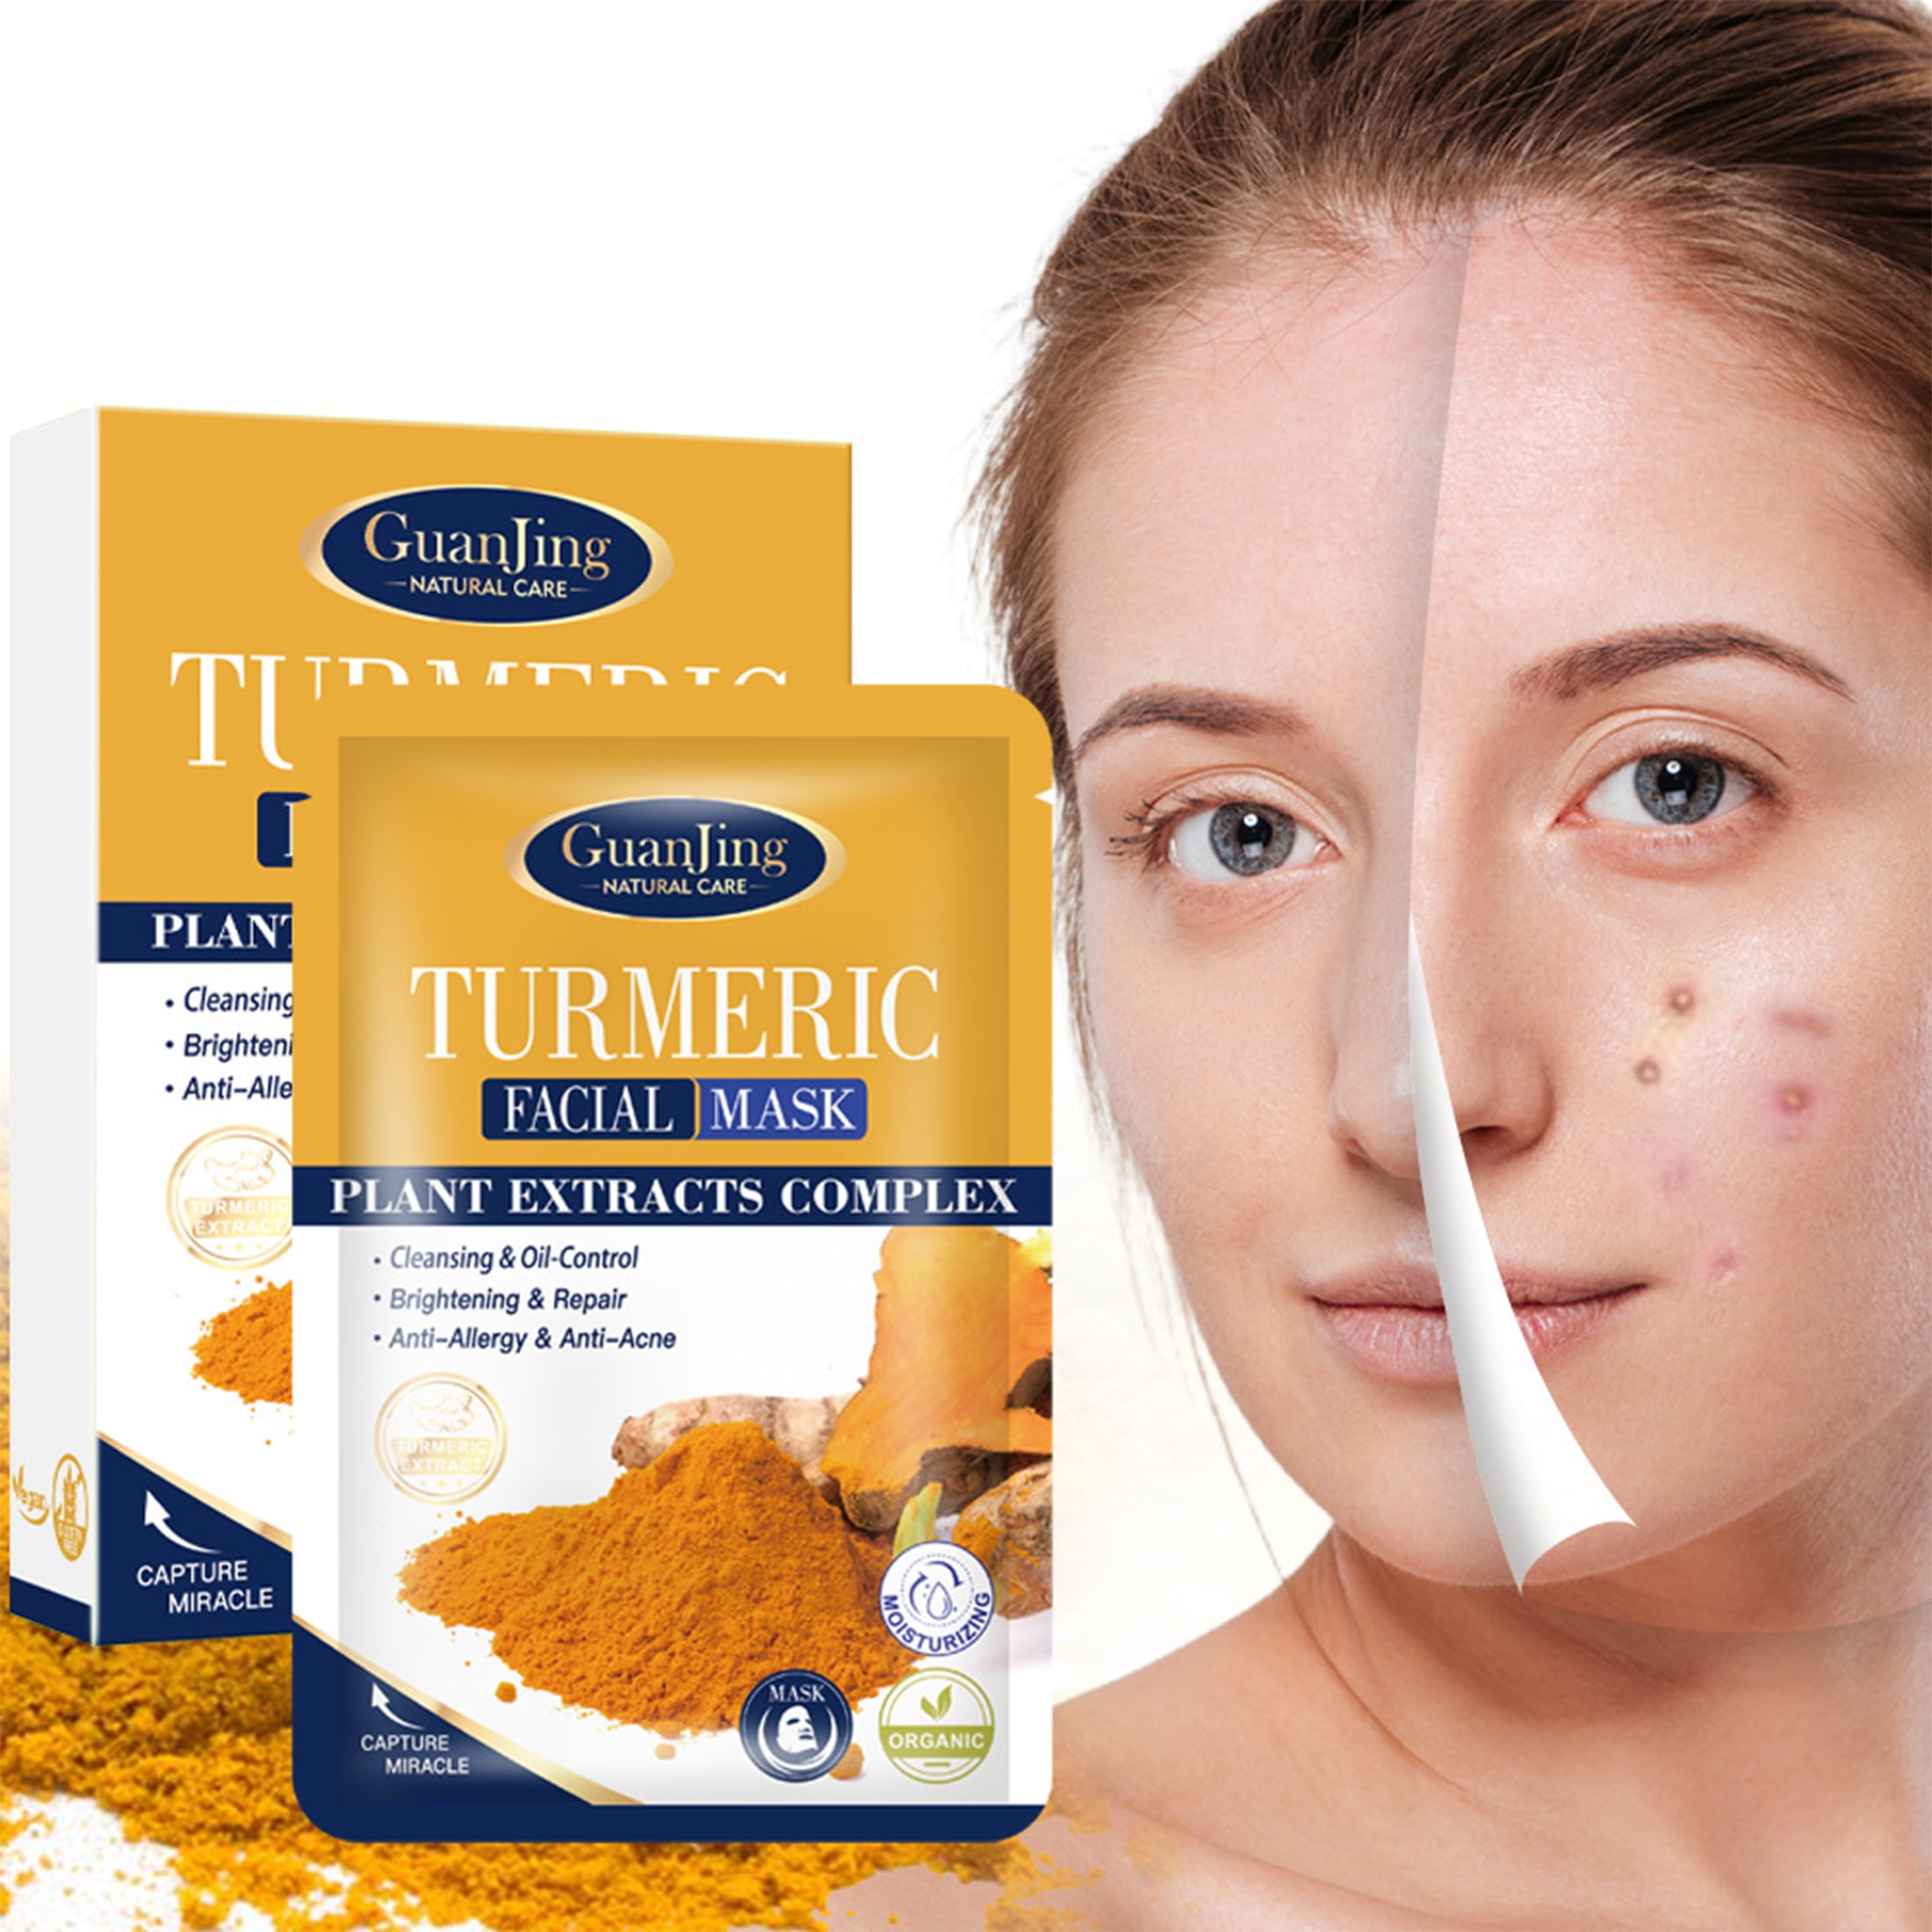 Foran klinke Validering Turmeric Facial Mask for Dark Spots , Skin Care Turmeric Face Mask for  Controlling Oil and Refining Pores 10 sheets - Walmart.com